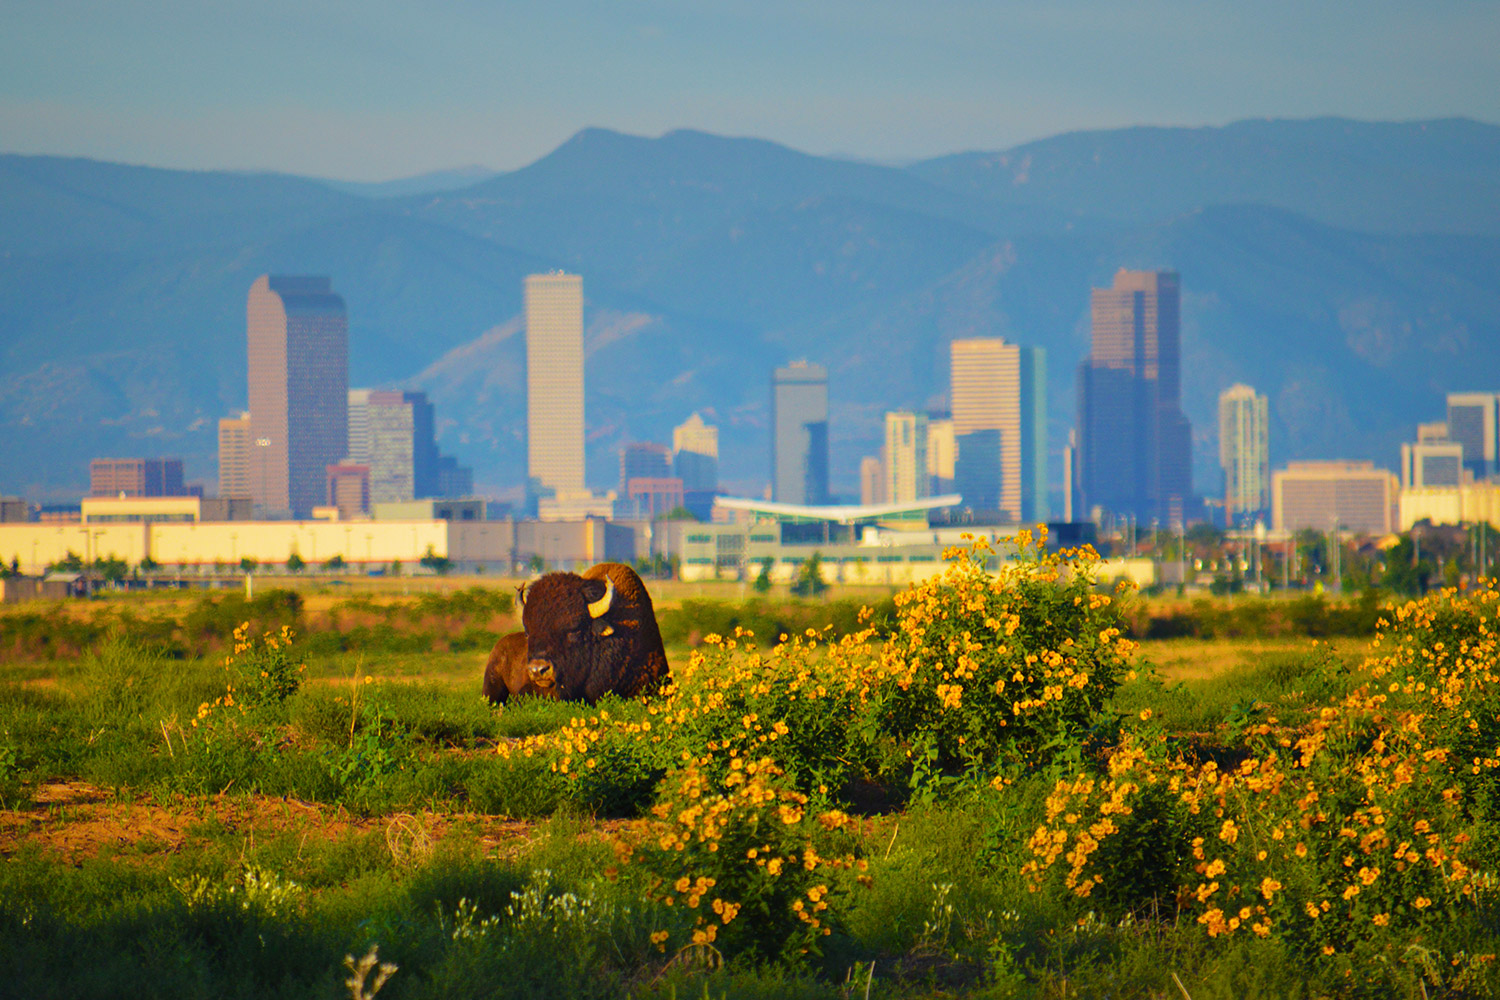 Bison in flower field showing the Denver, Colorado skyline